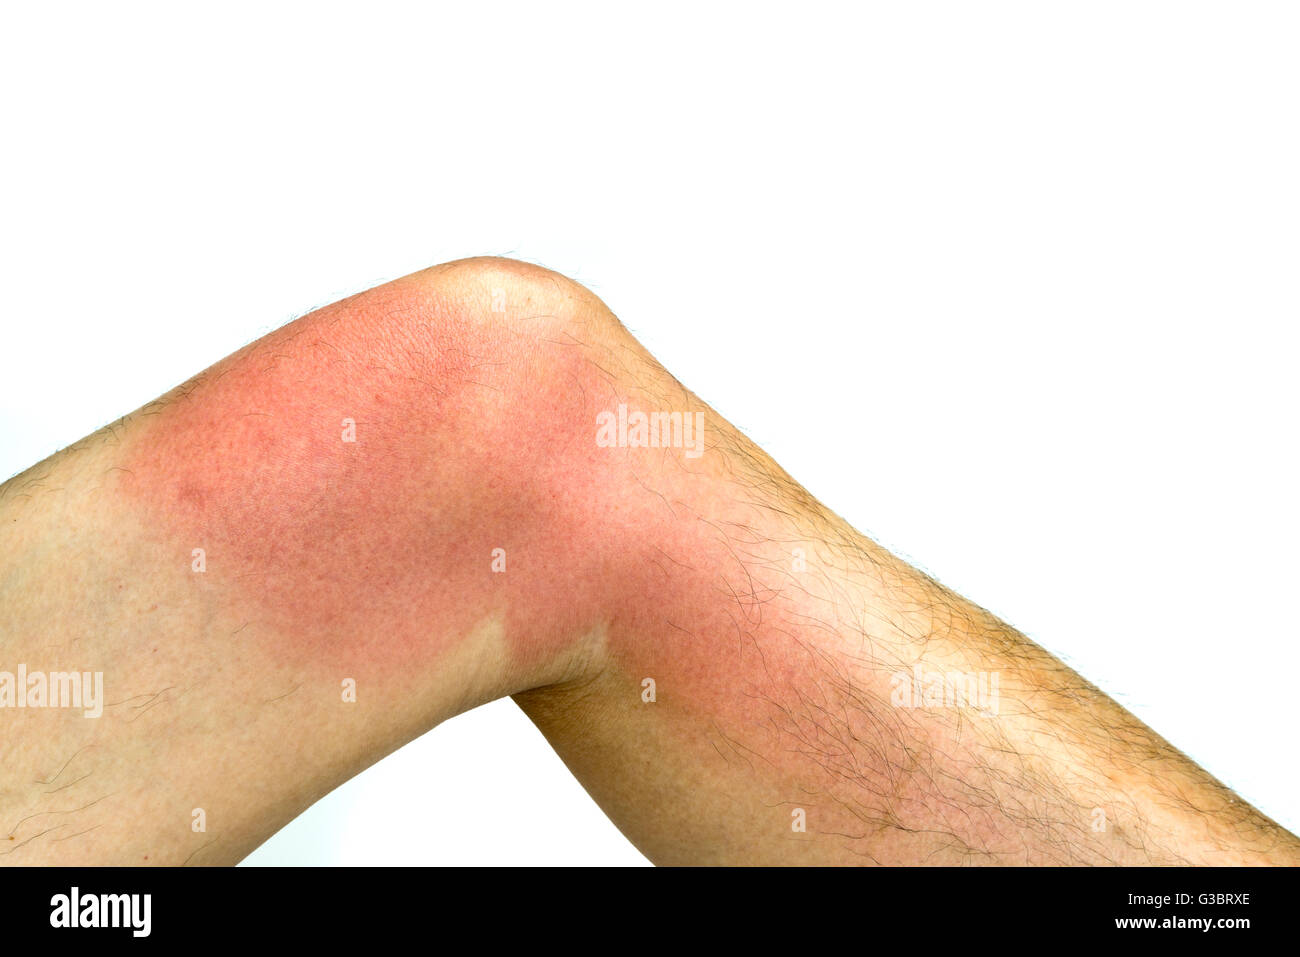 Sunburnt on skin around knee of man's left leg, isolated on white background Stock Photo